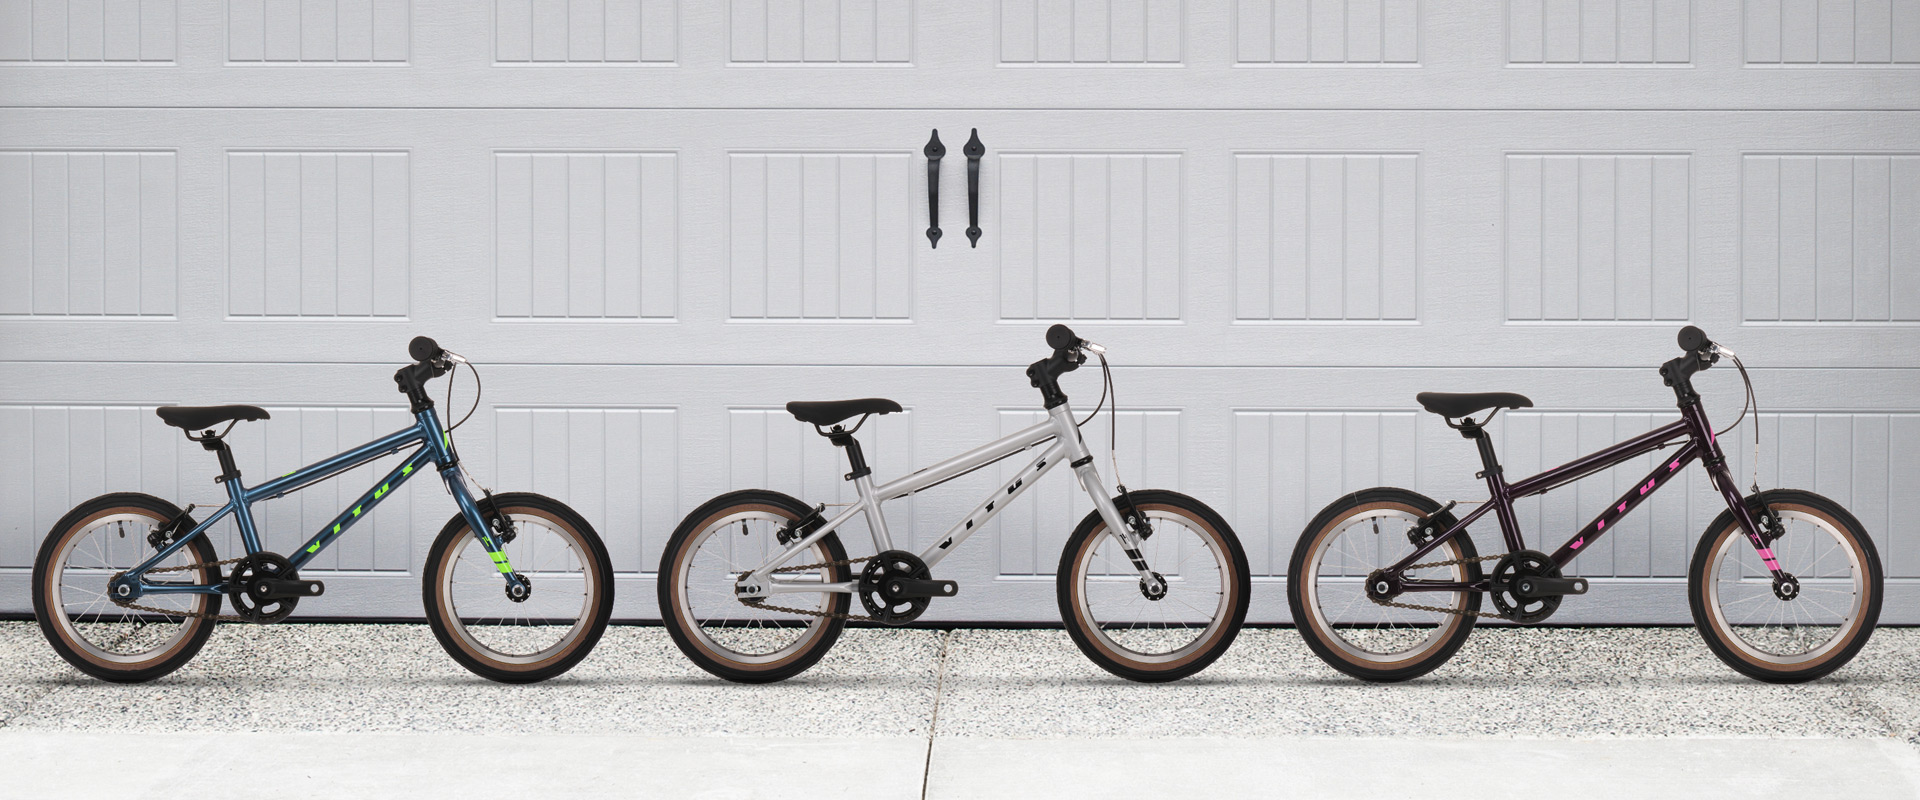 vitus 14 inch bike